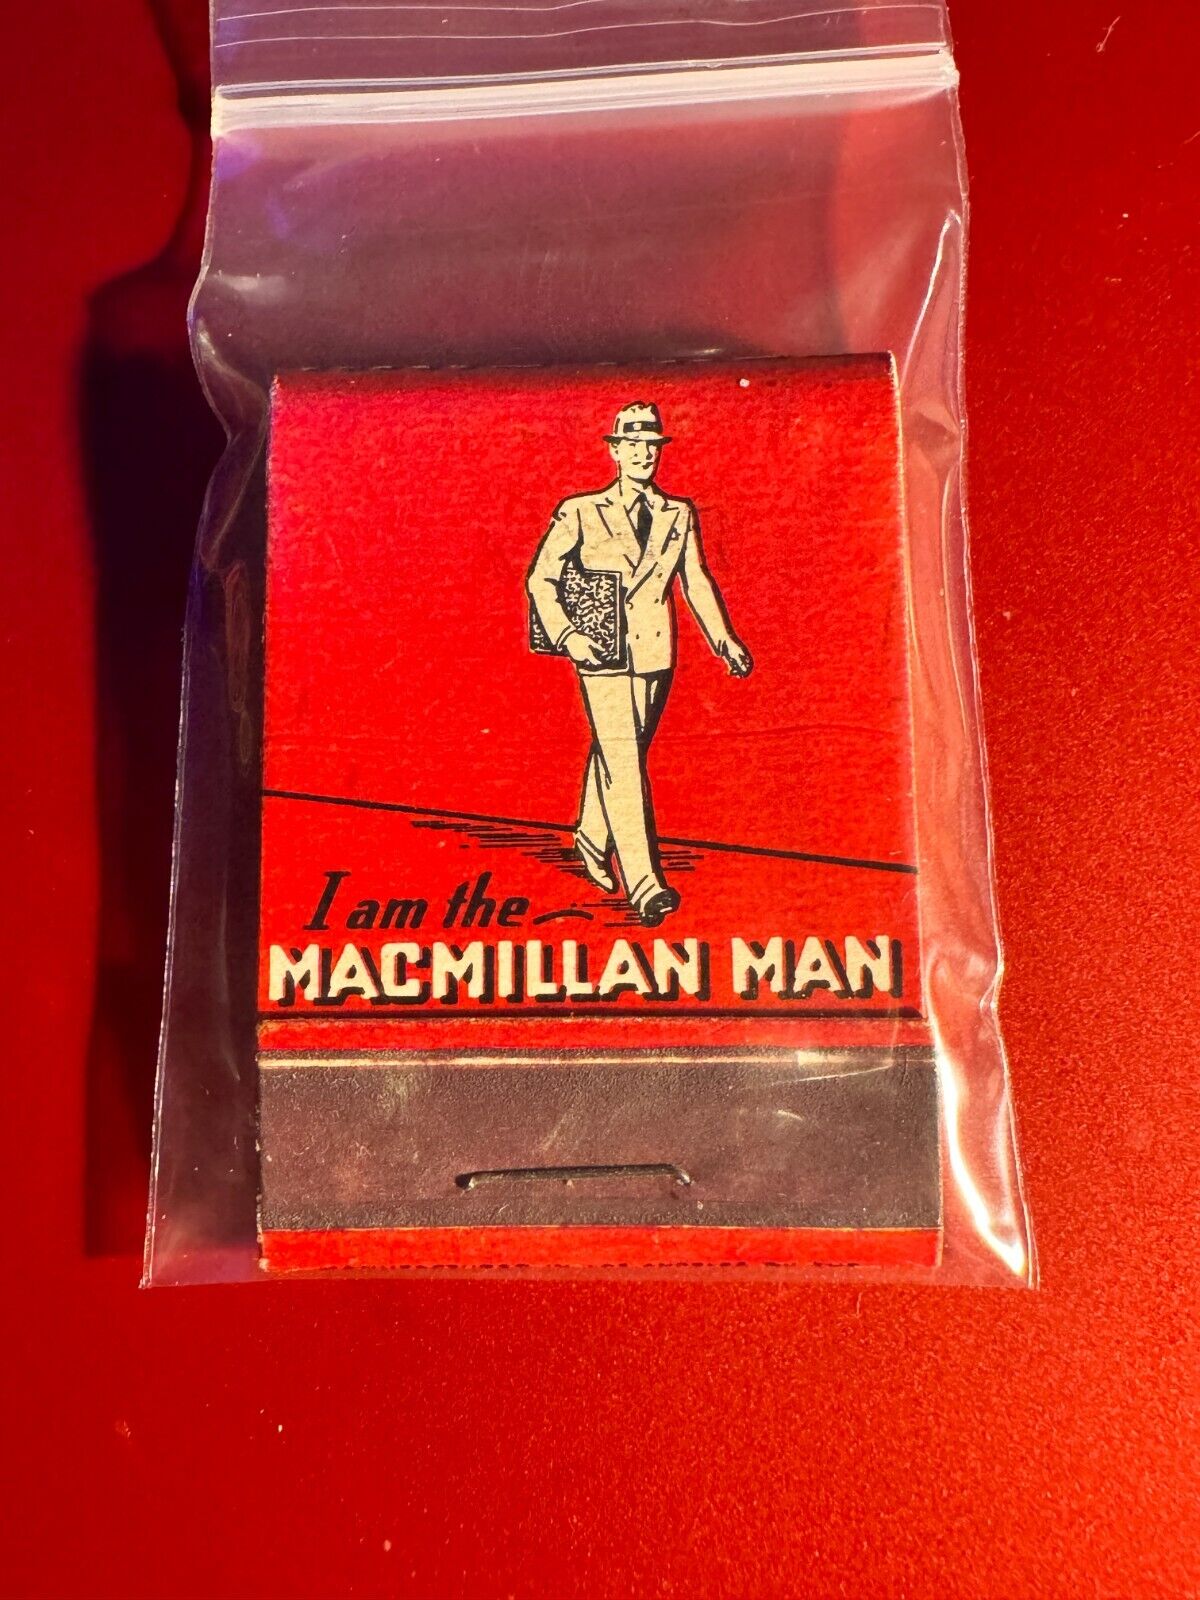 MATCHBOOK - MACMILLAN RING FREE MOTOR OIL - I AM THE MACMILLAN MAN - UNSTRUCK